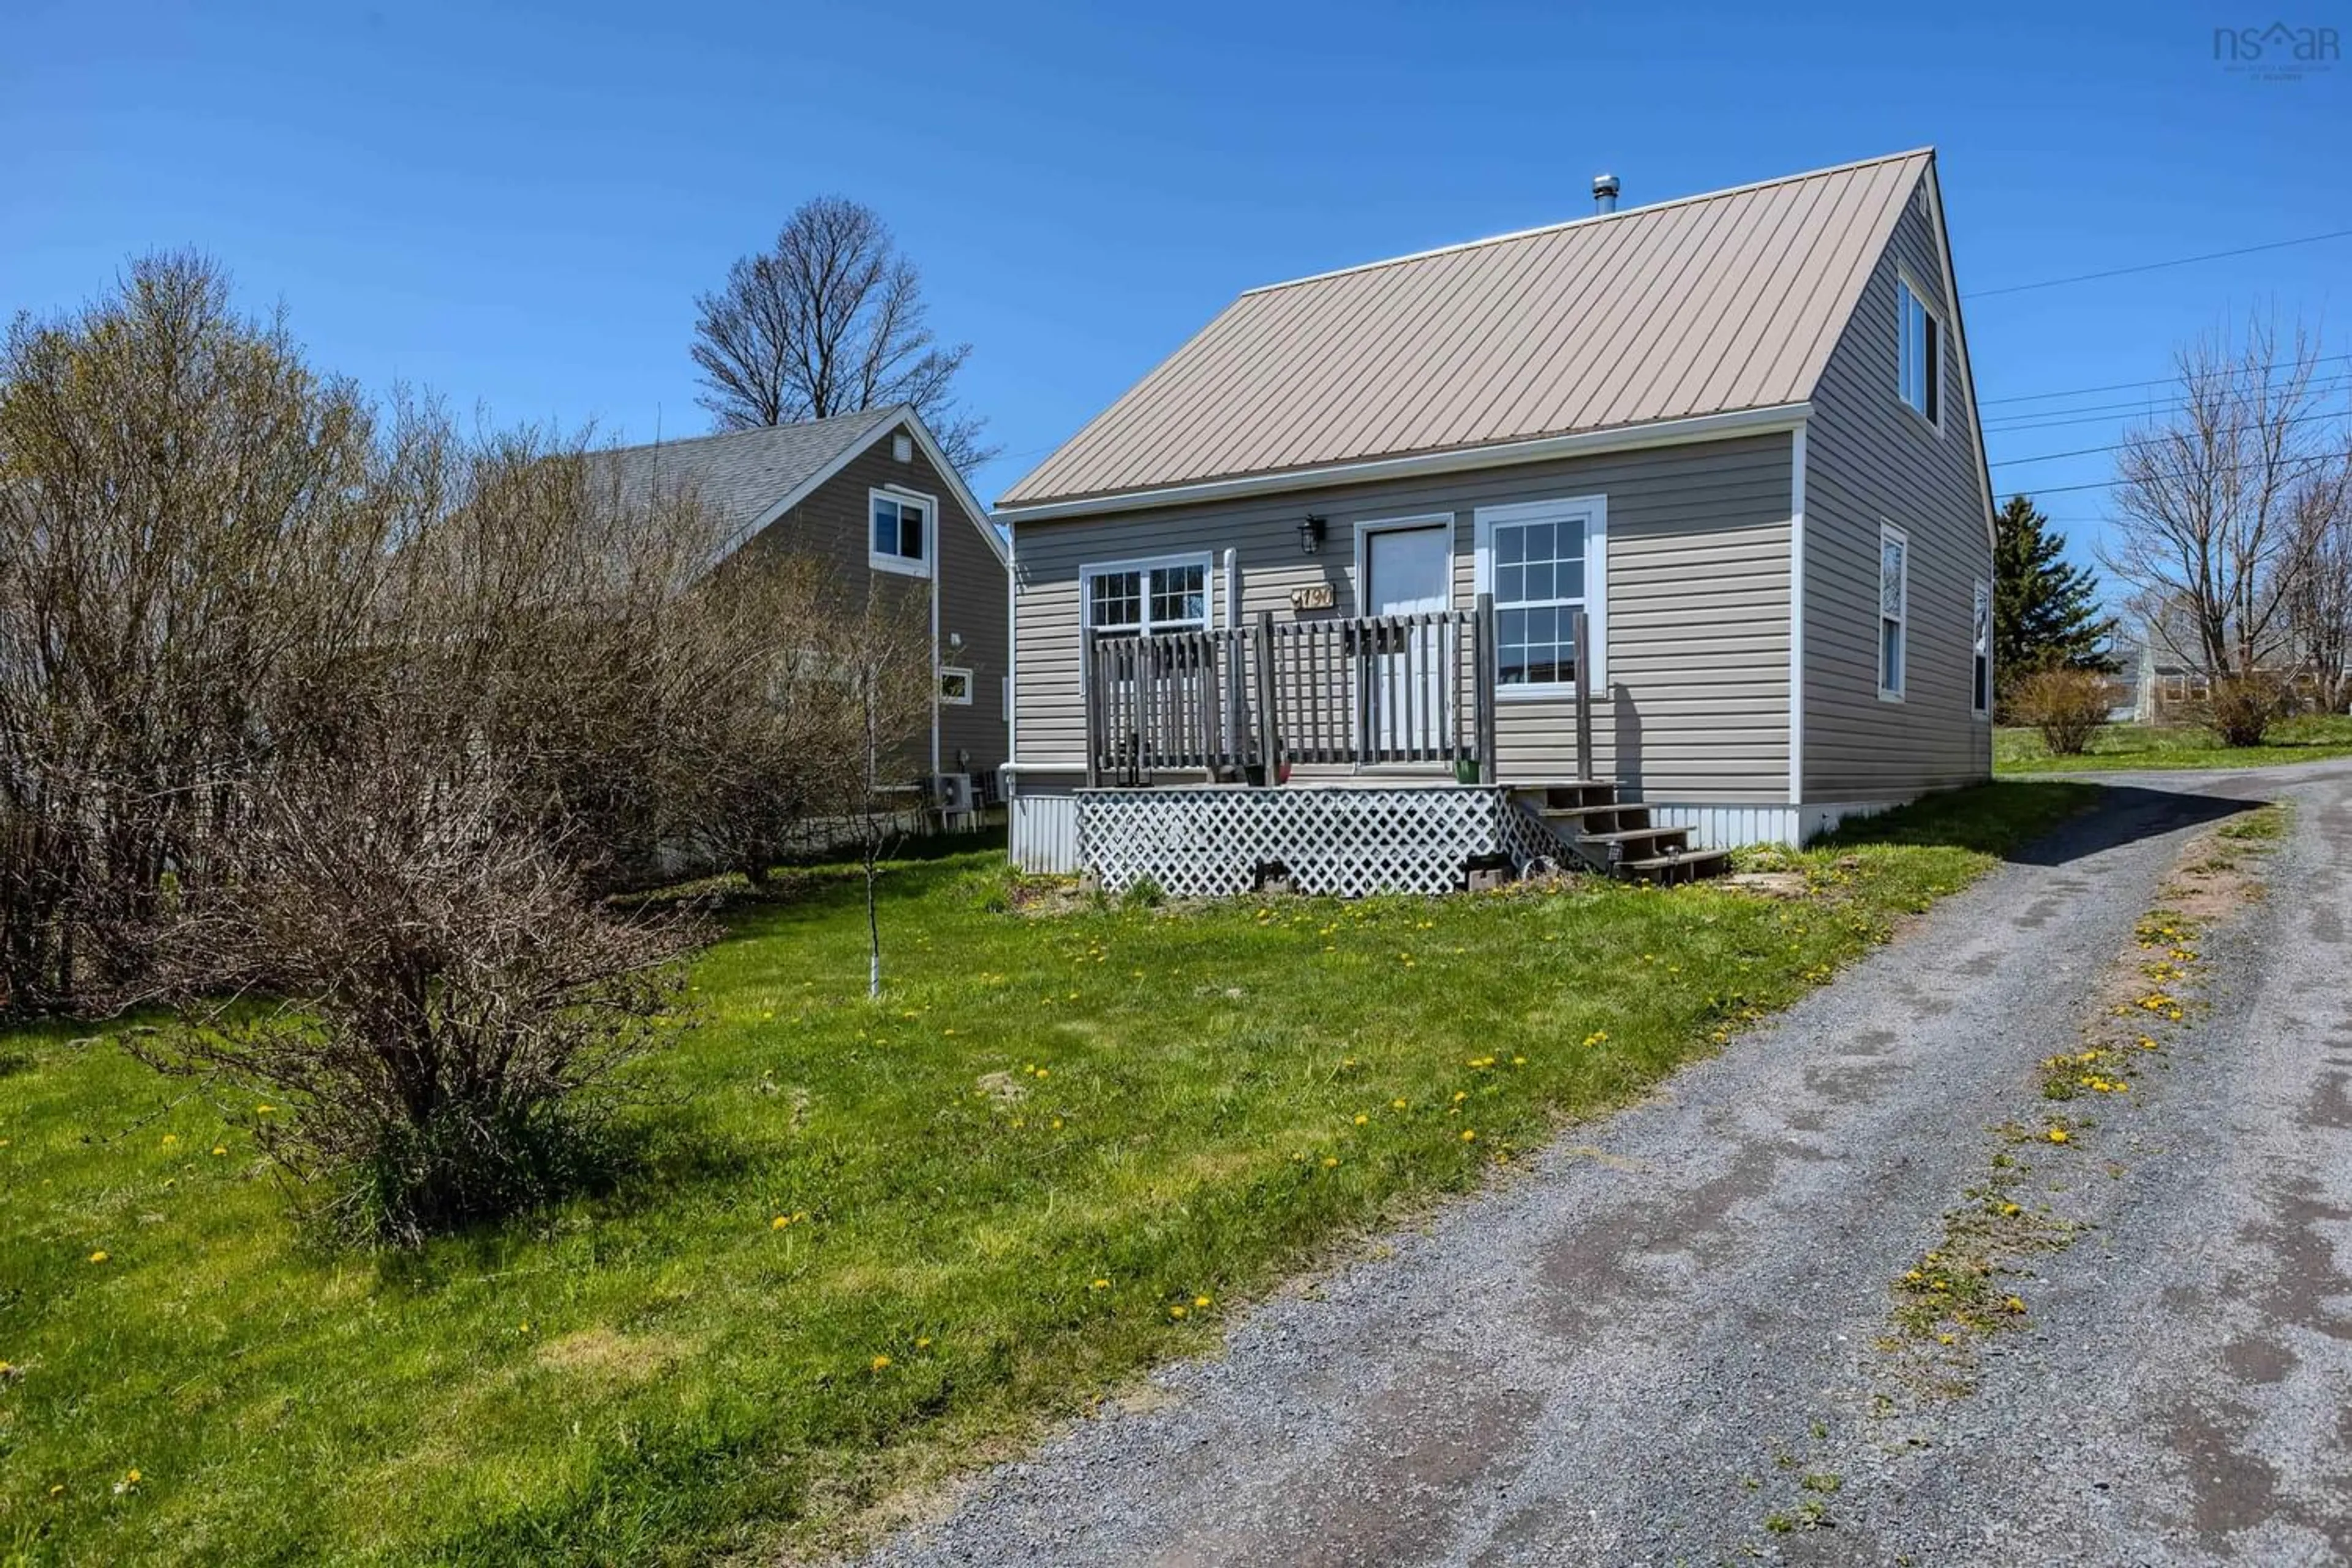 Cottage for 190 Poplar St, Pictou Nova Scotia B0K 1H0